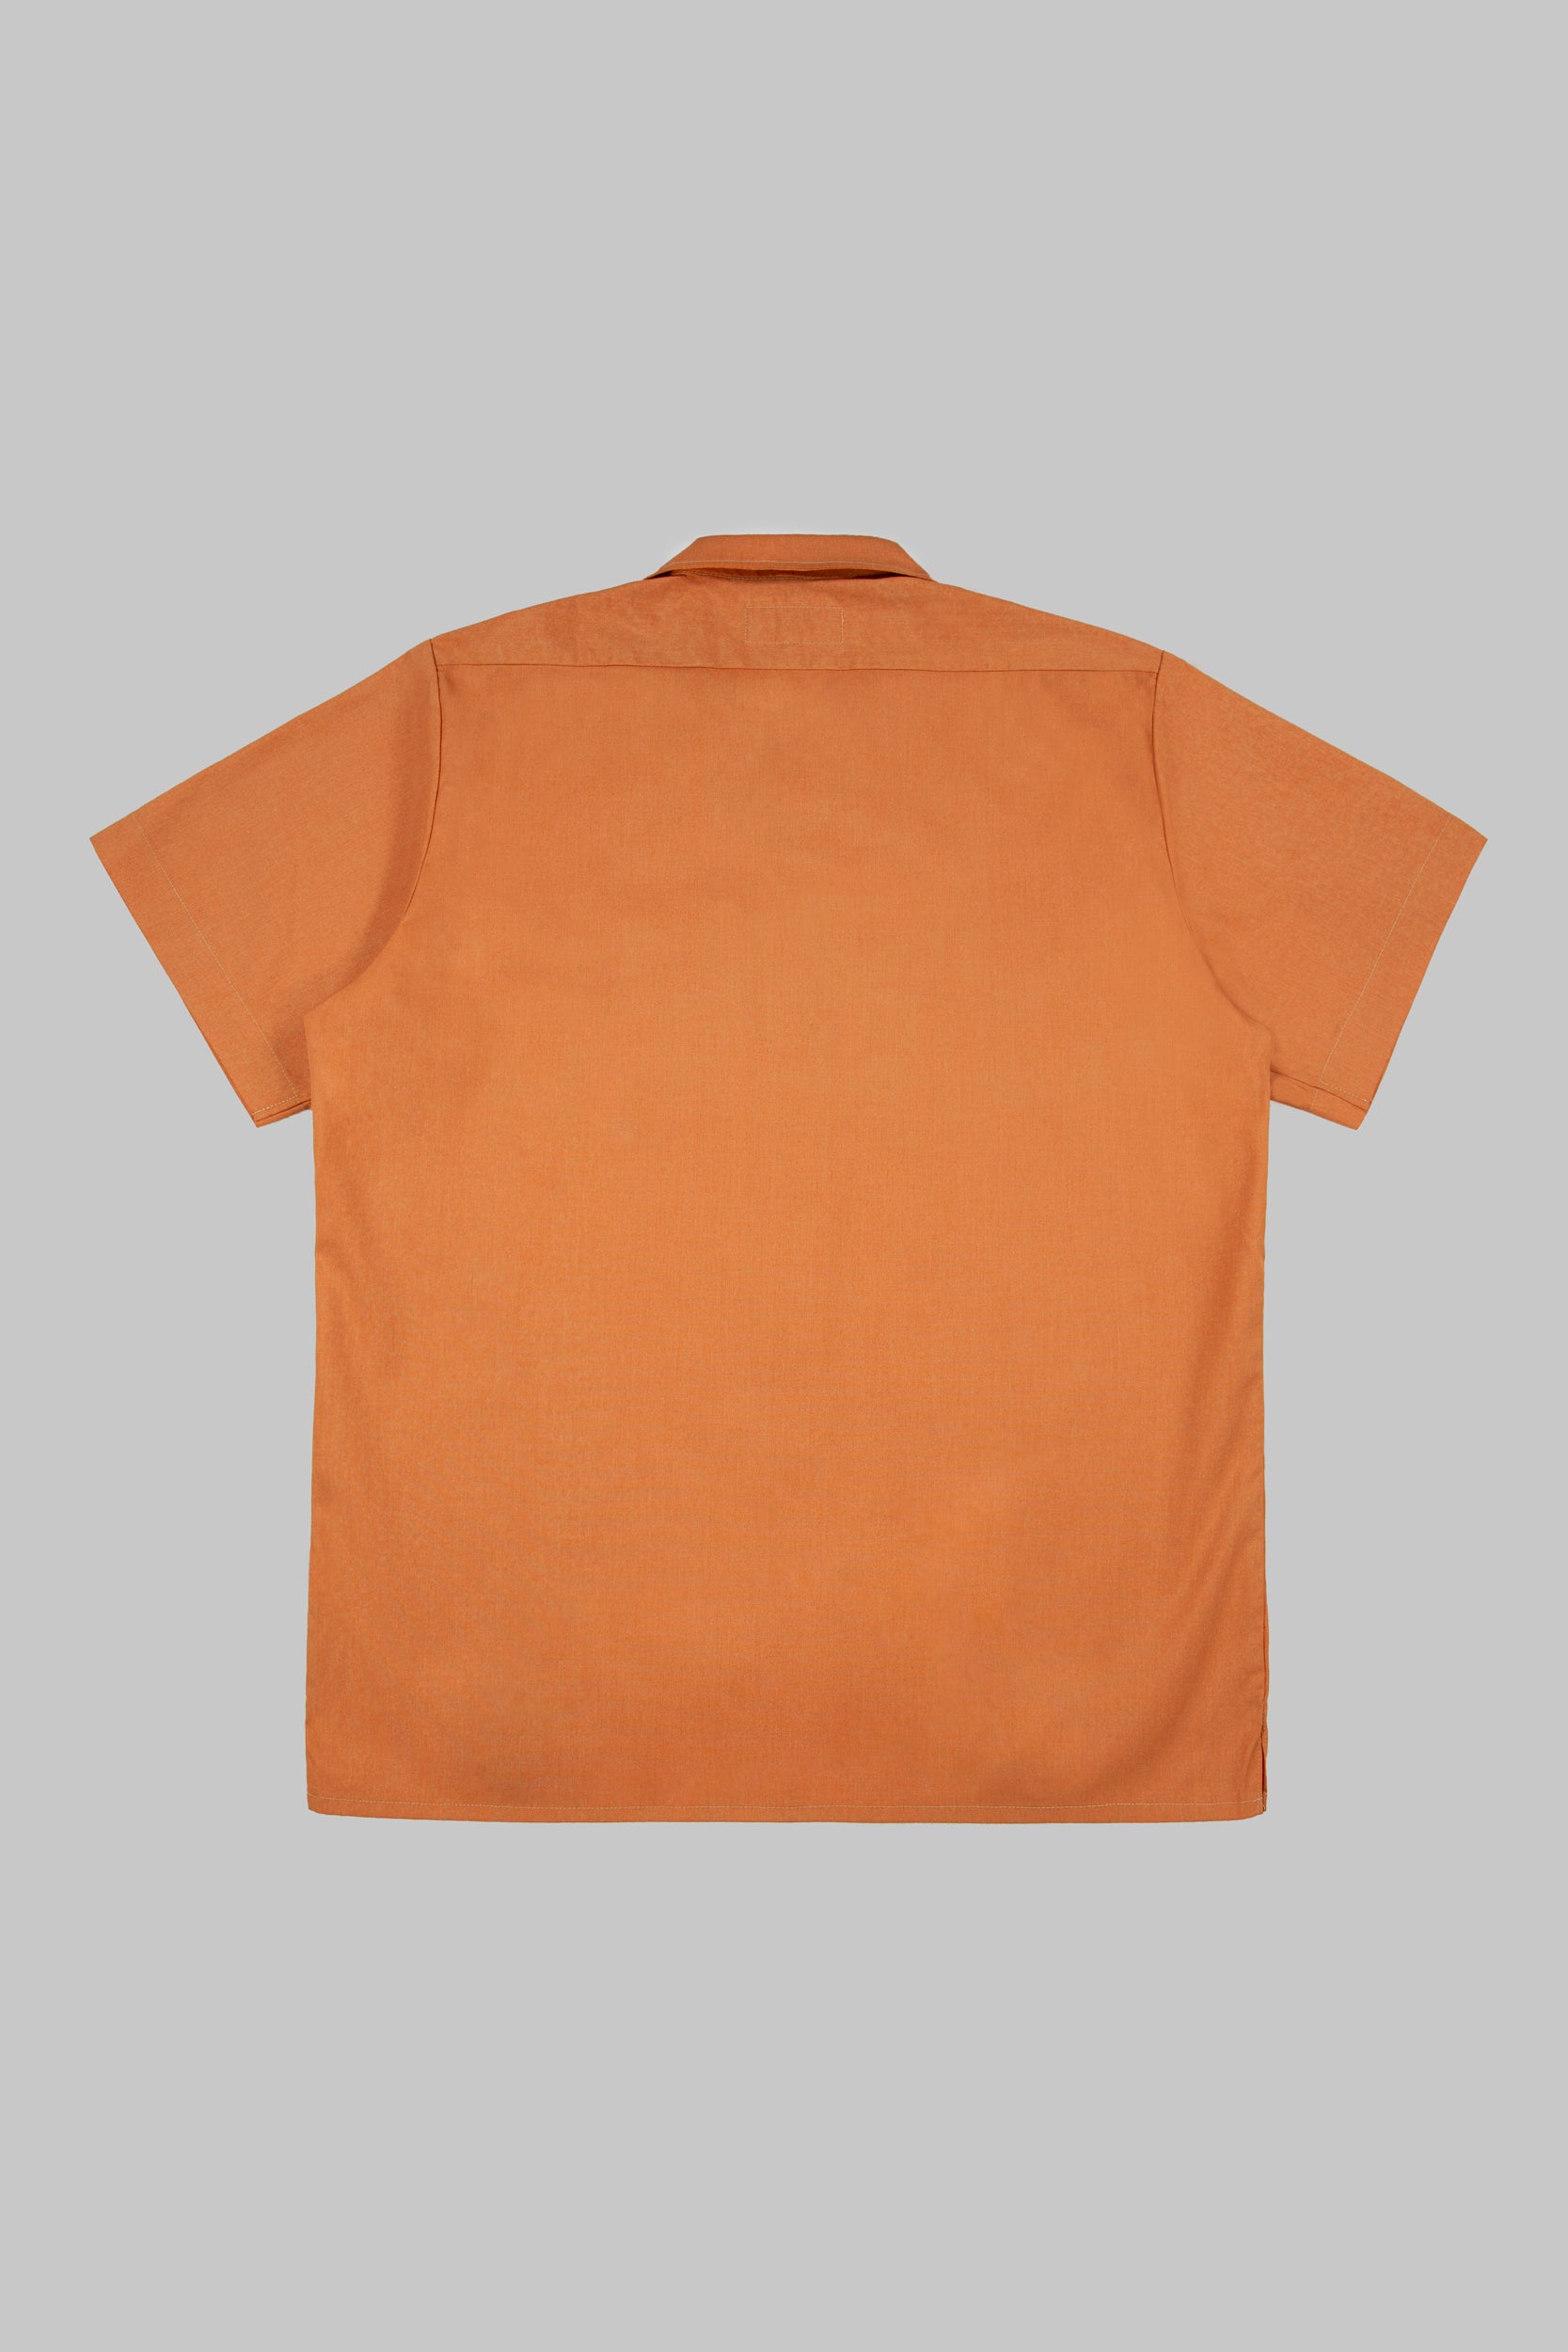 Day Tripper Shirt Mute Orange